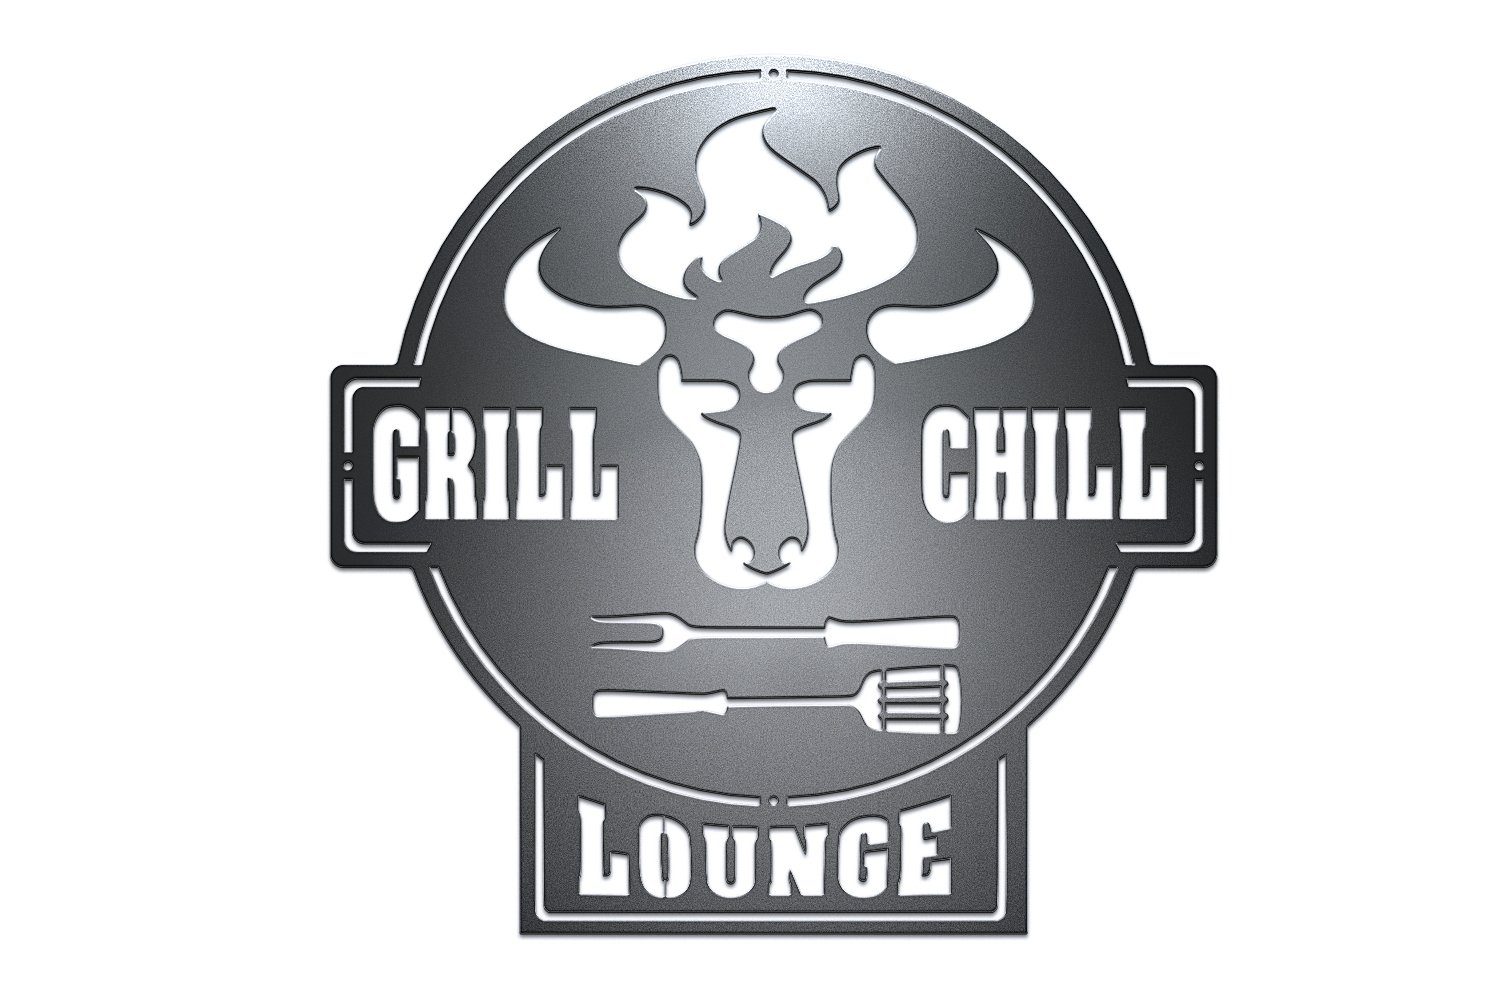 & + Bulle Lounge tuning-art Stahl GC01-B Chill Schwarz Schwarz Grill Grill Wanddekoobjekt Schild Lounge